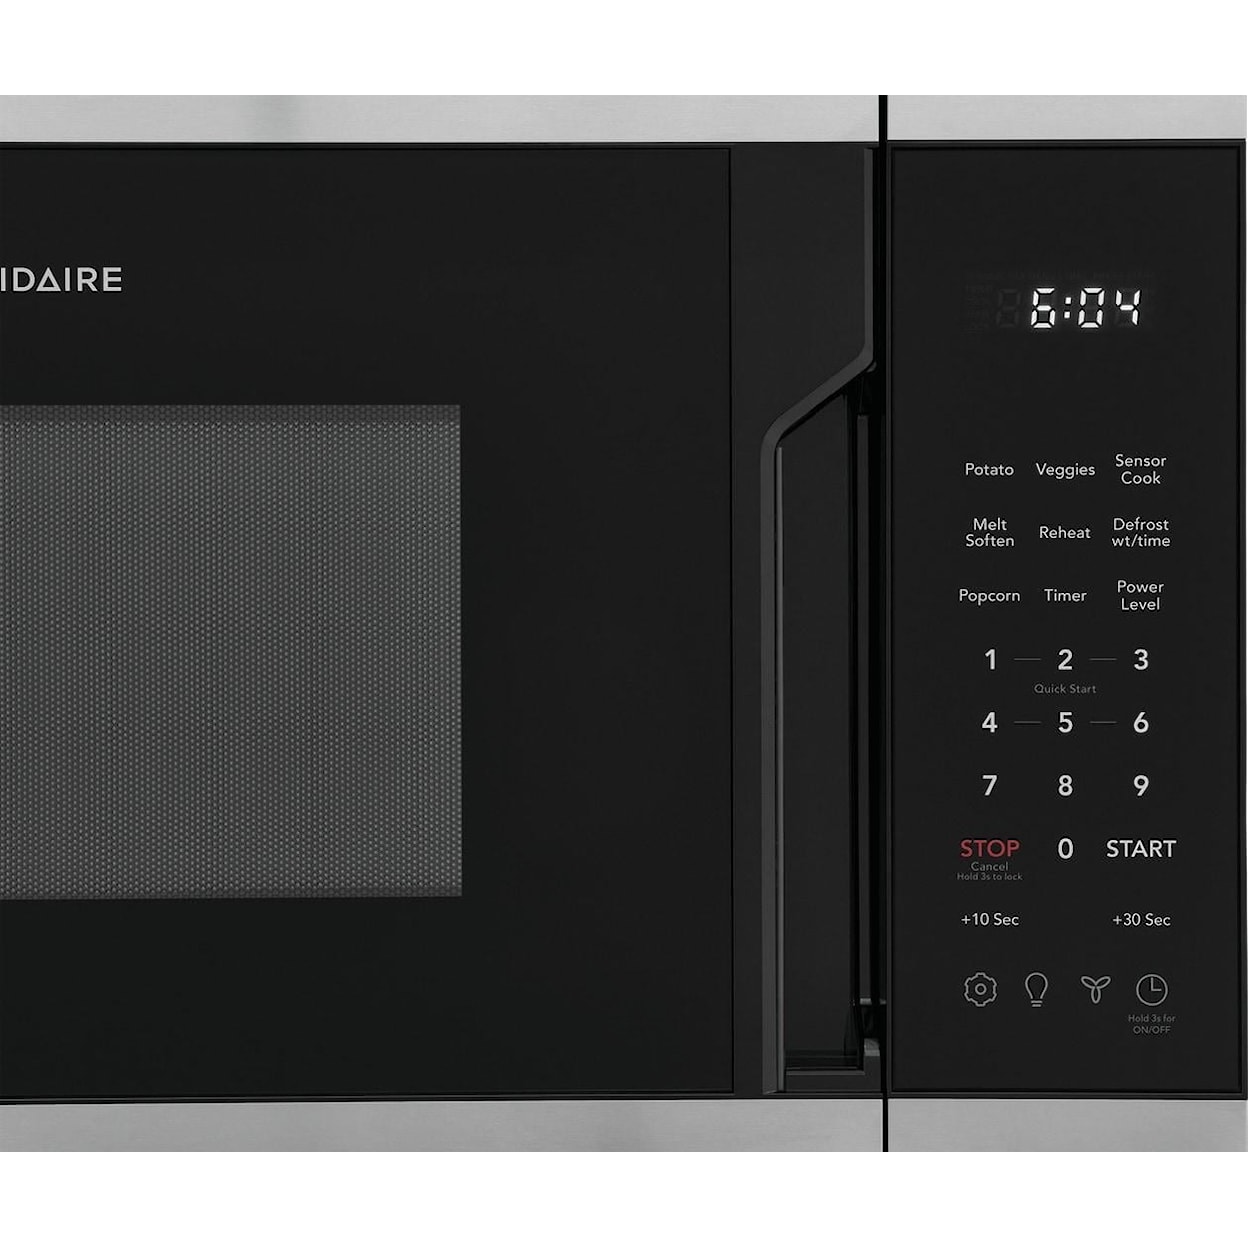 Frigidaire Microwave Microwave